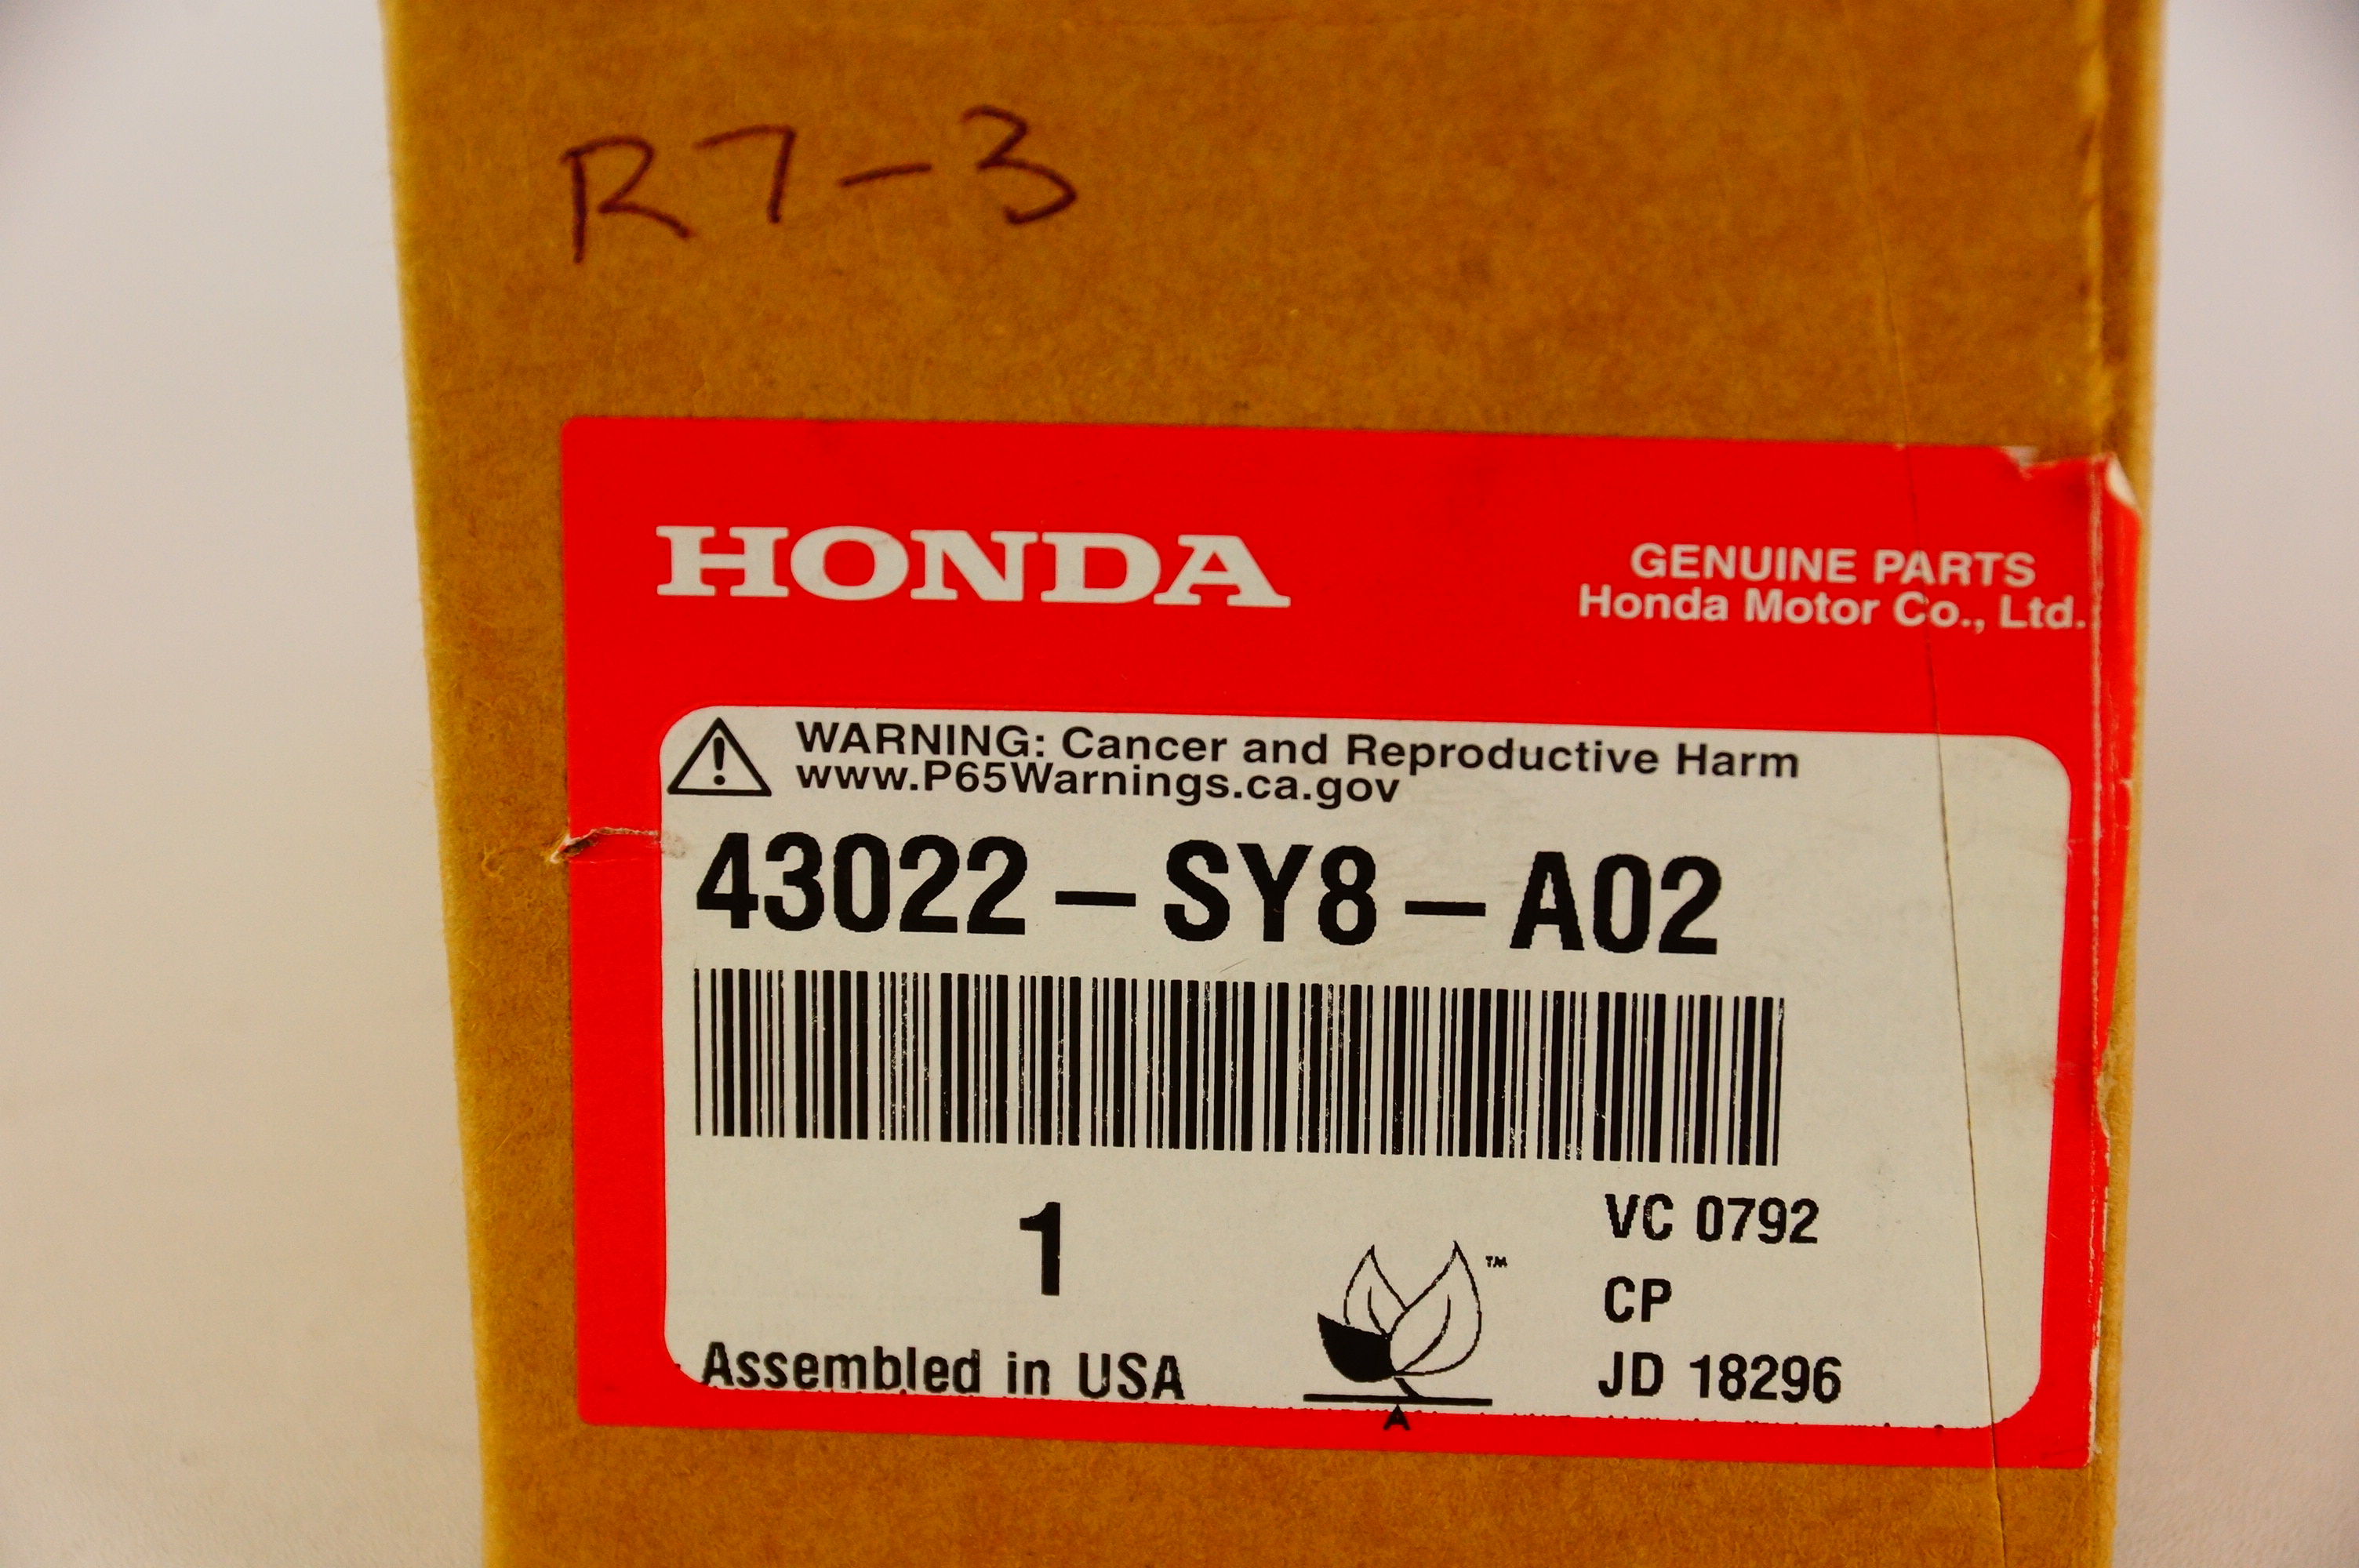 Genuine OEM 43022-SY8-A02 Honda Rear Brake Pads 1996-02 Accord Free Shipping - image 5